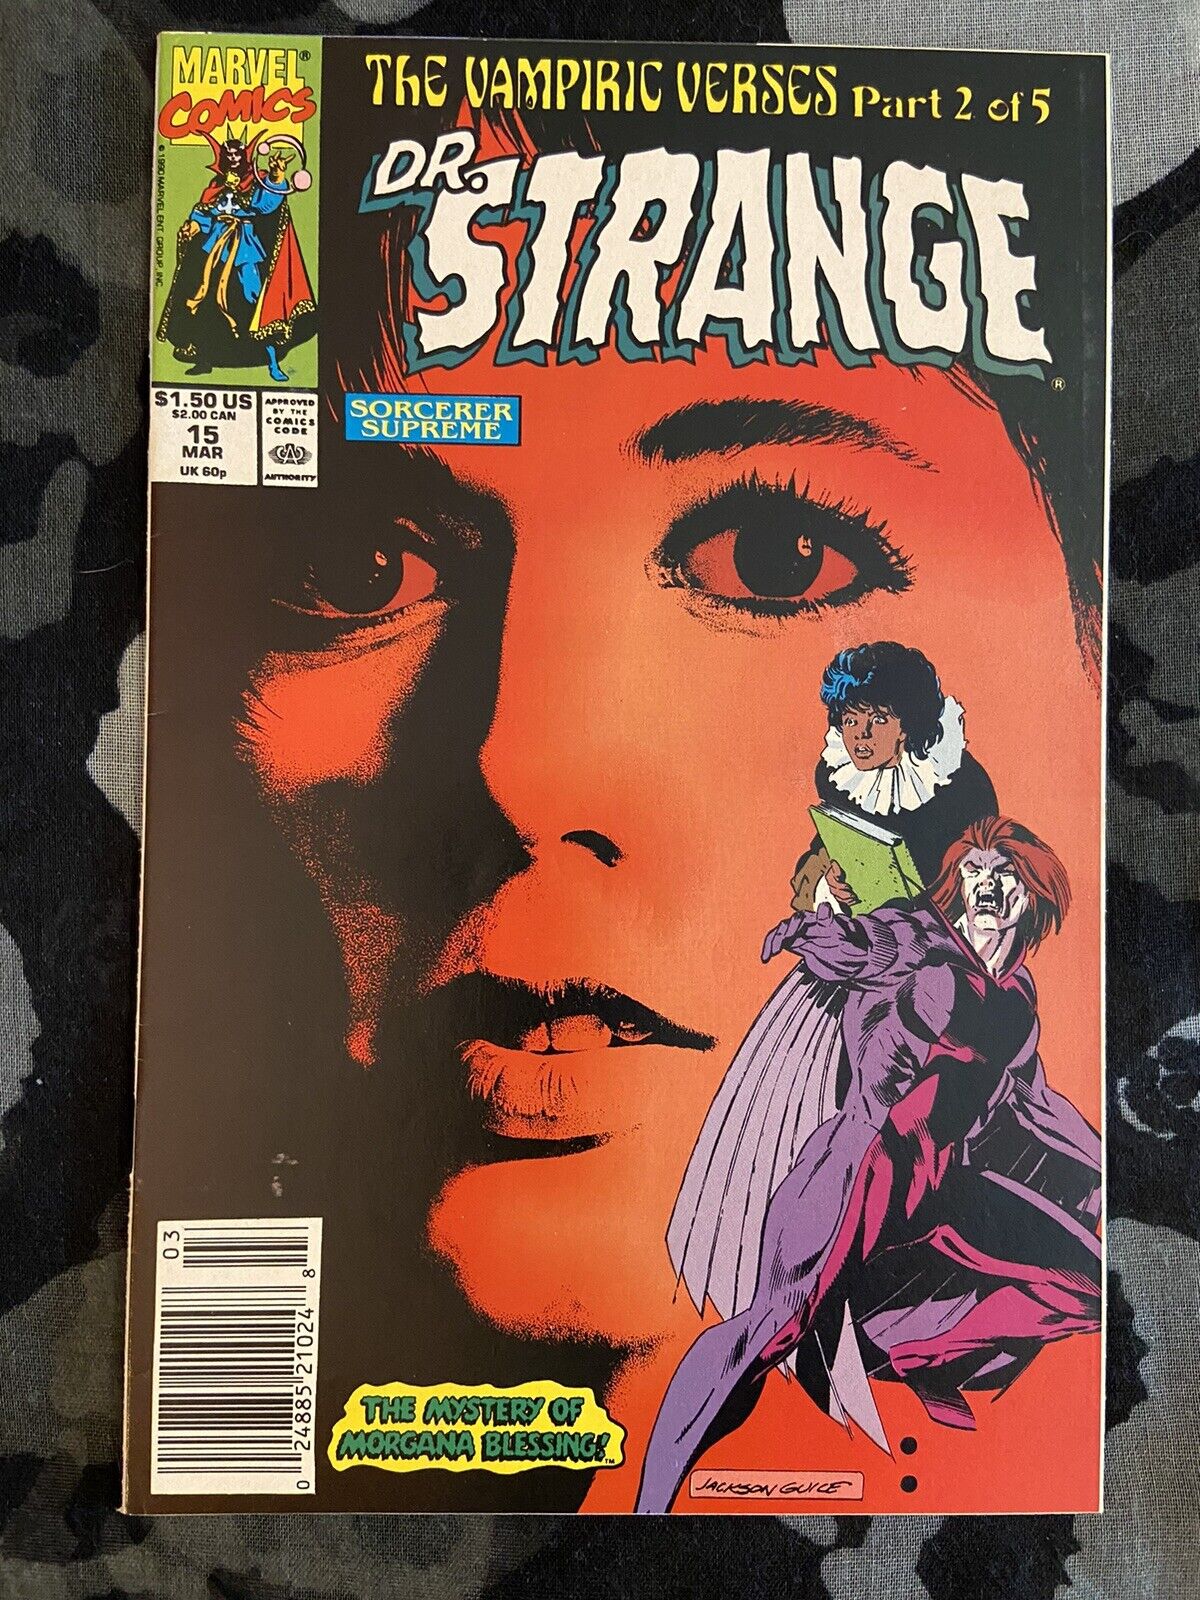 DOCTOR STRANGE SORCERER SUPREME #15 (1990) CONTROVERSIAL COVER